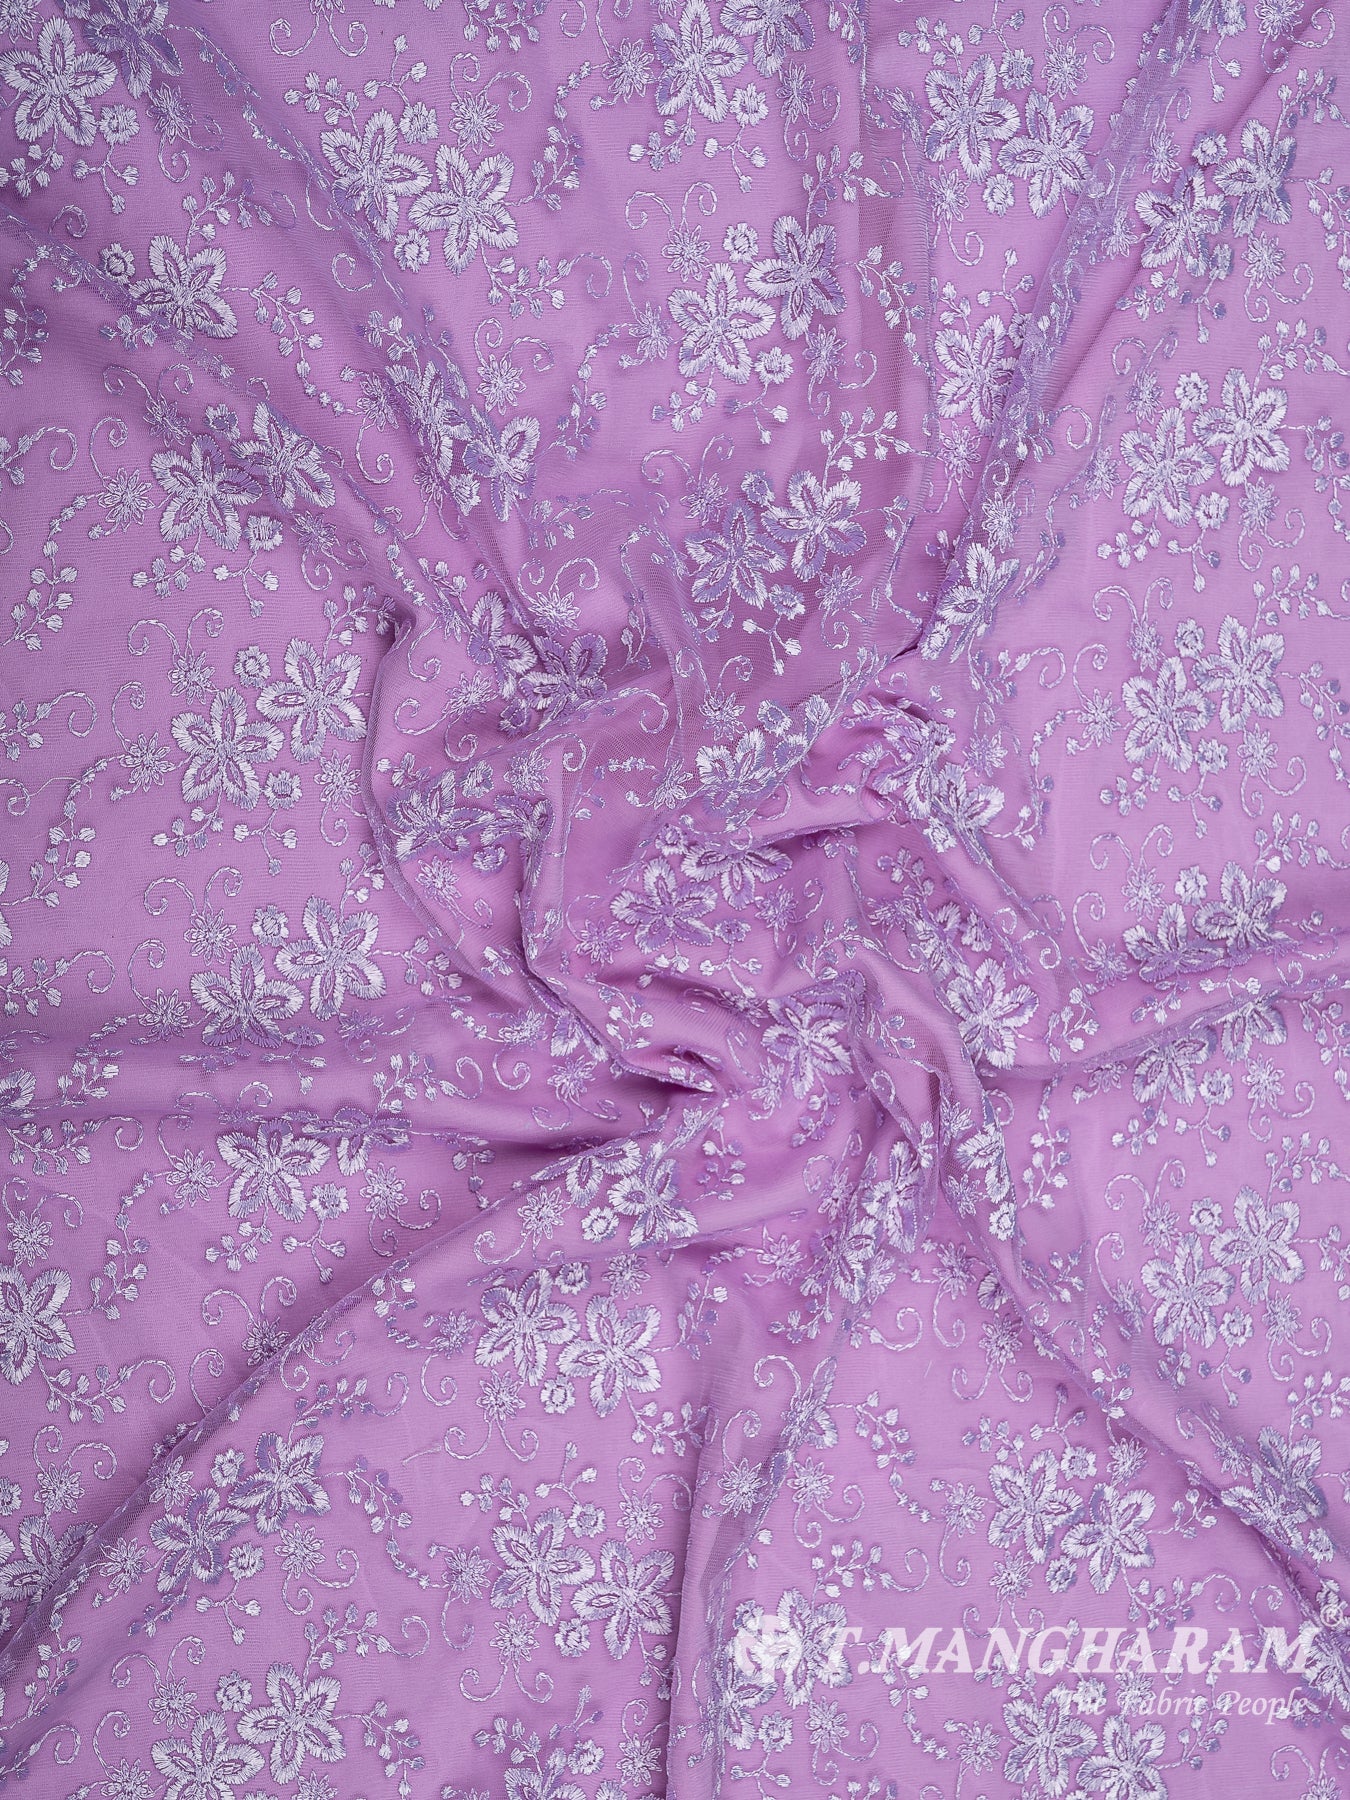 Violet Fancy Net Fabric - EB5808 view-4